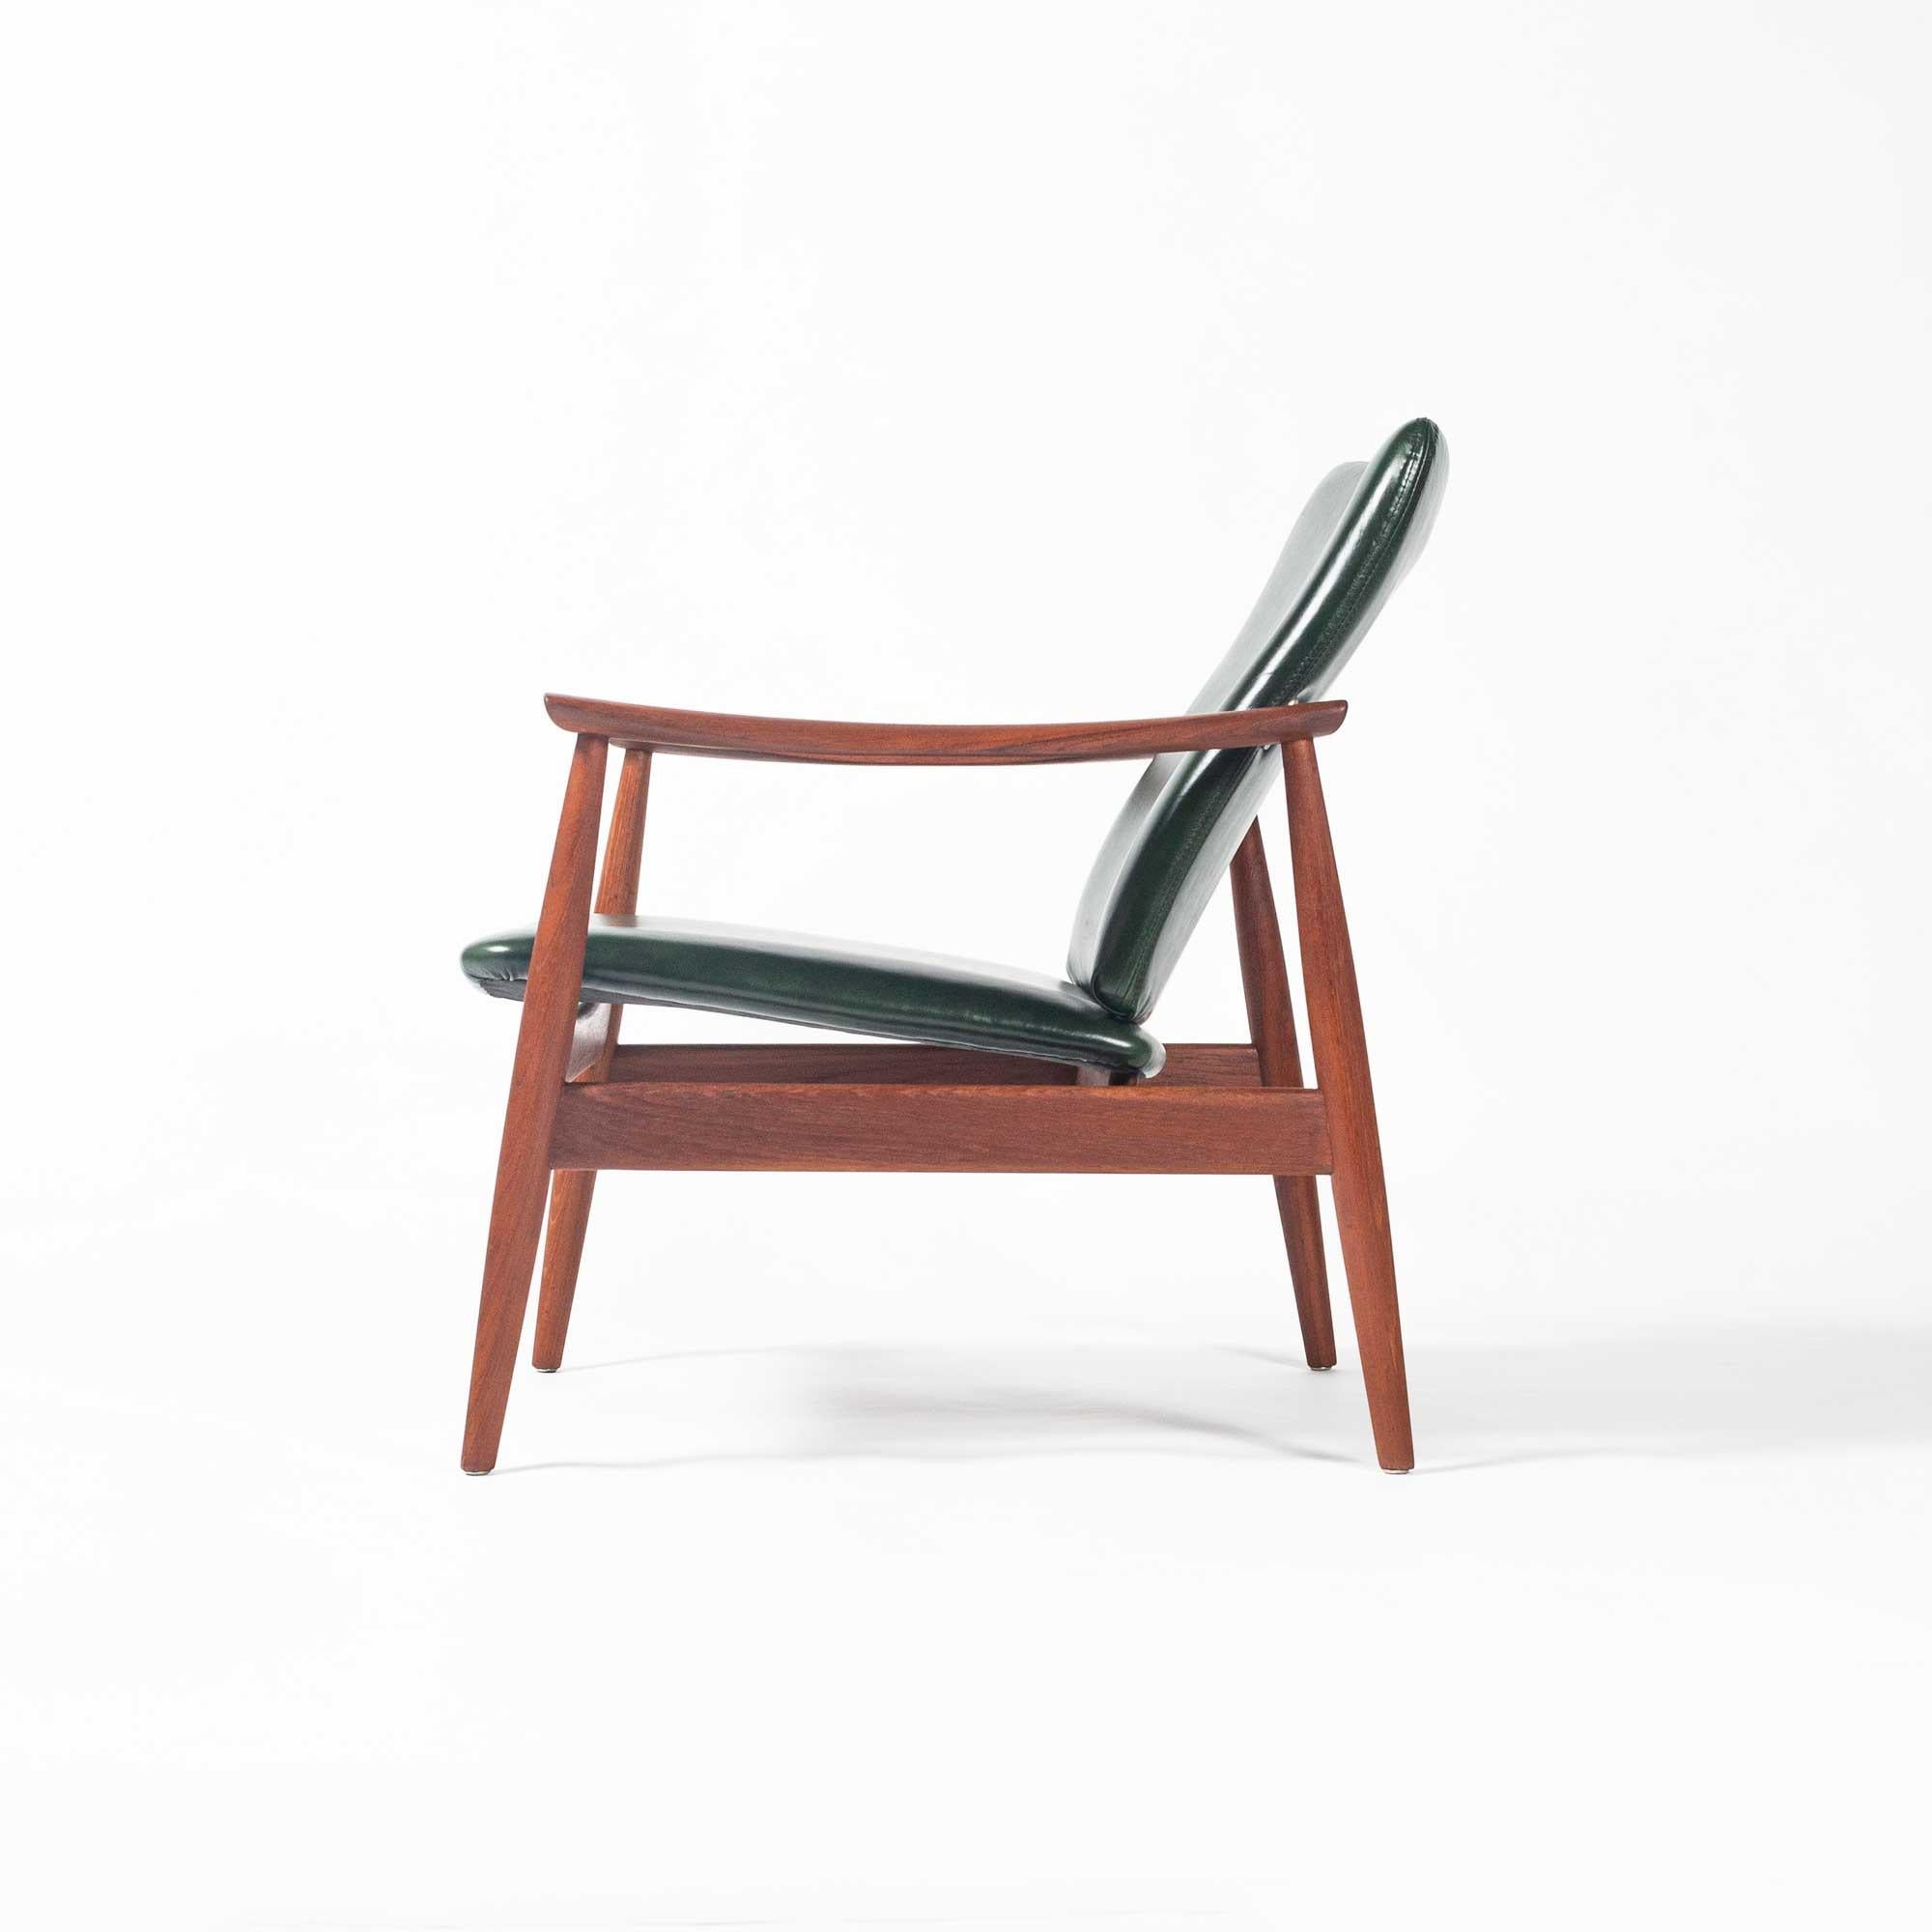 Danish Finn Juhl For Frances & Son Easy Chair FD138 in Teak and Green Leather